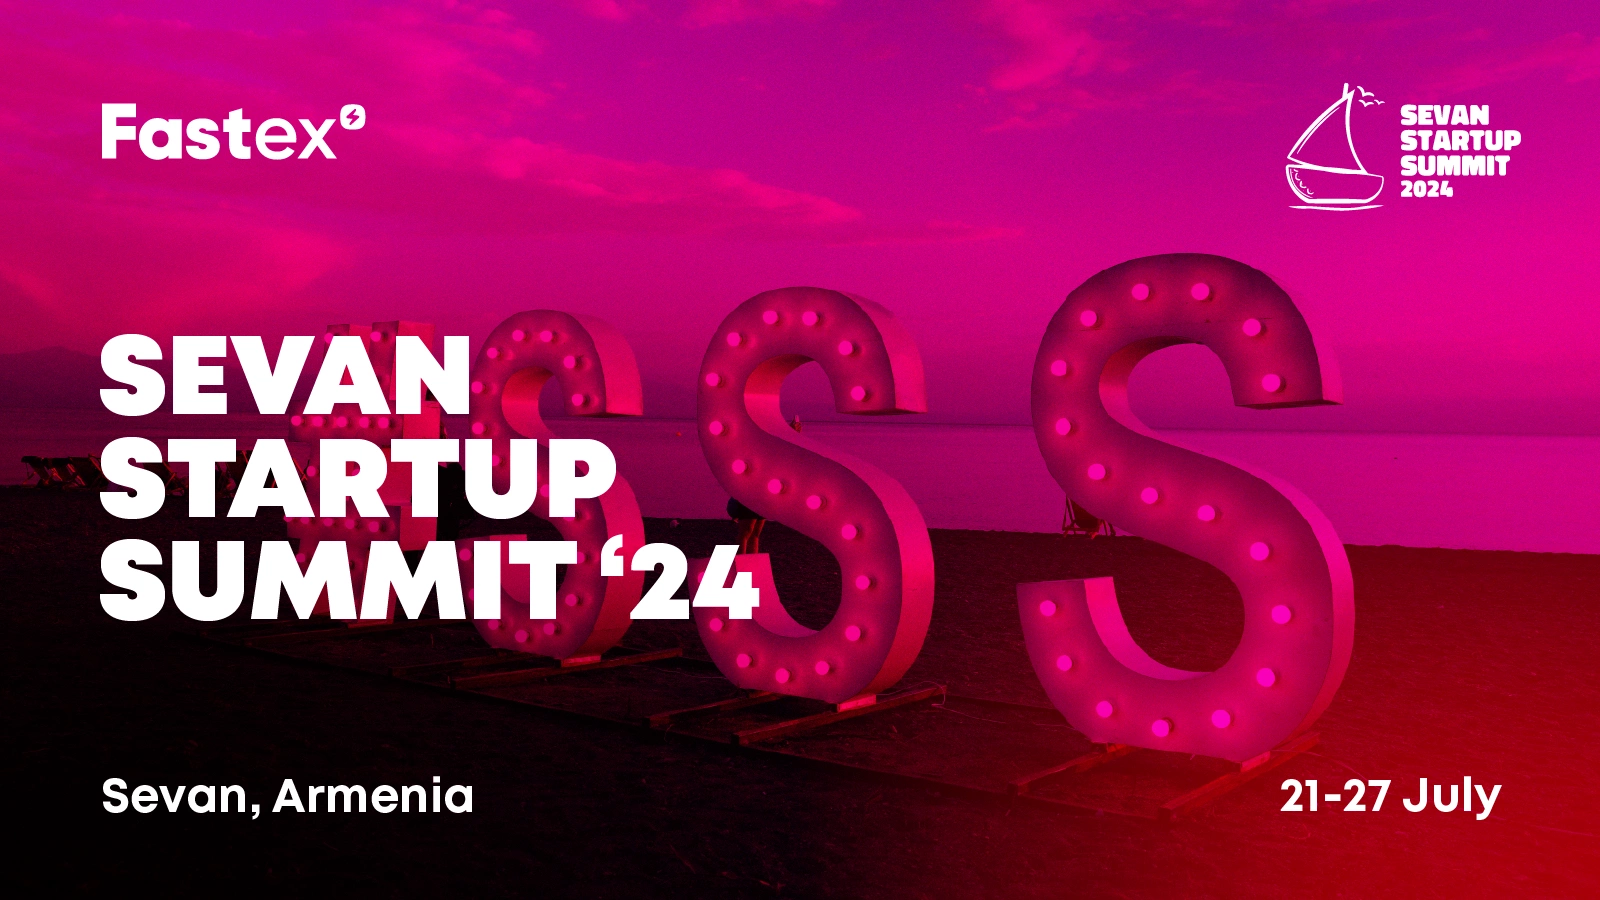 Fastex-ը կմասնակցի  Sevan Startup Summit 2024-ին՝ որպես գլխավոր գործընկեր